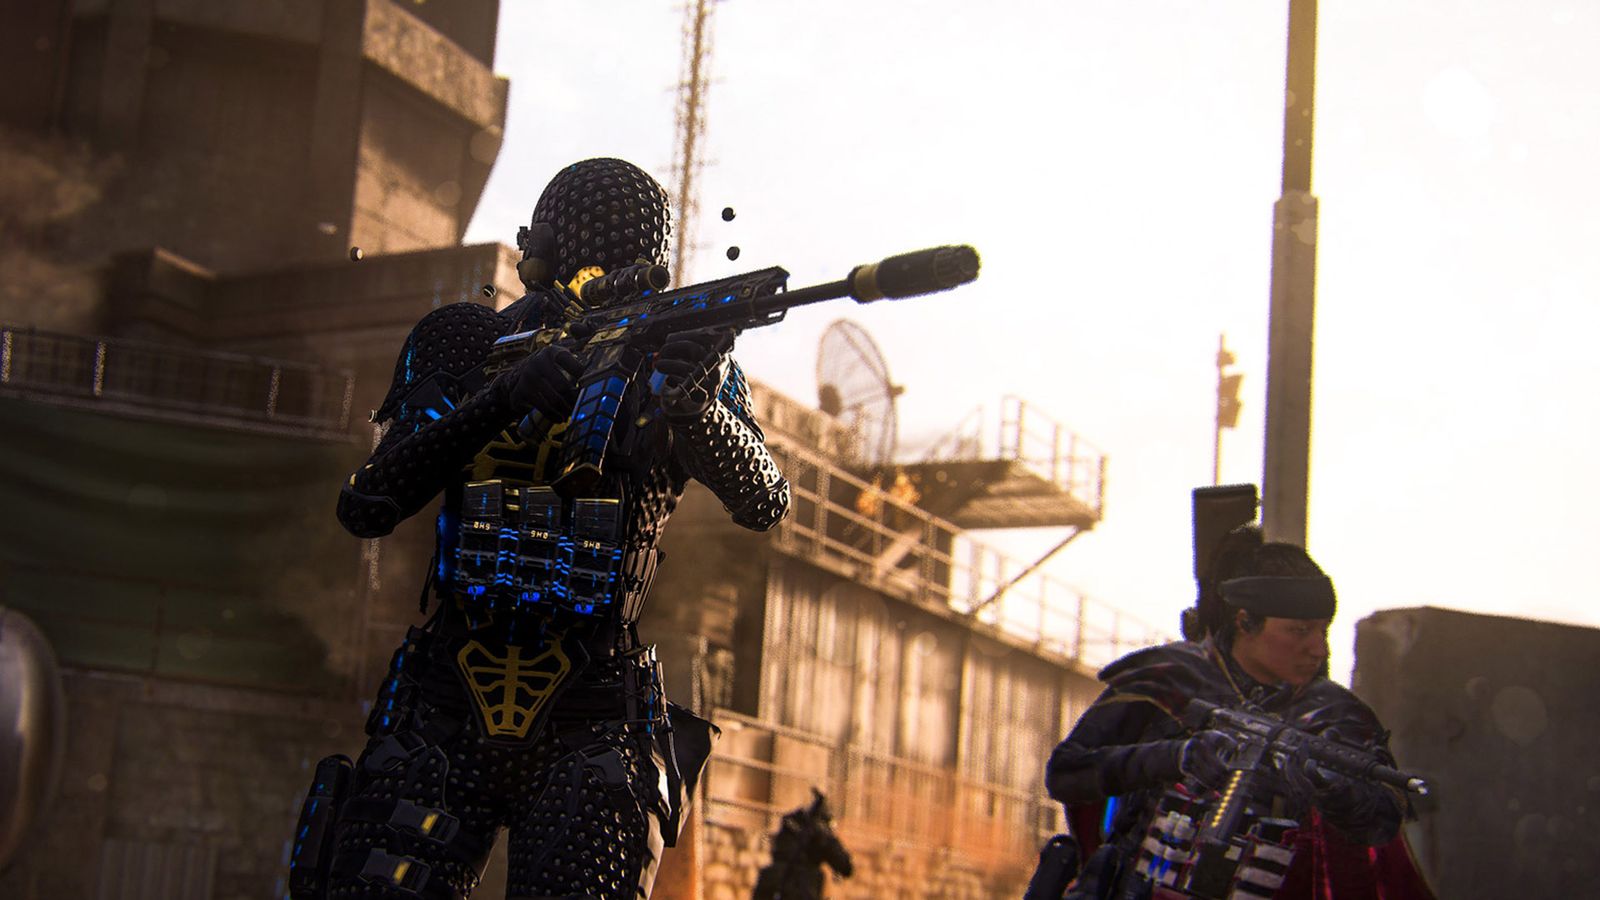 Modern Warfare 3 players aiming with assault rifles